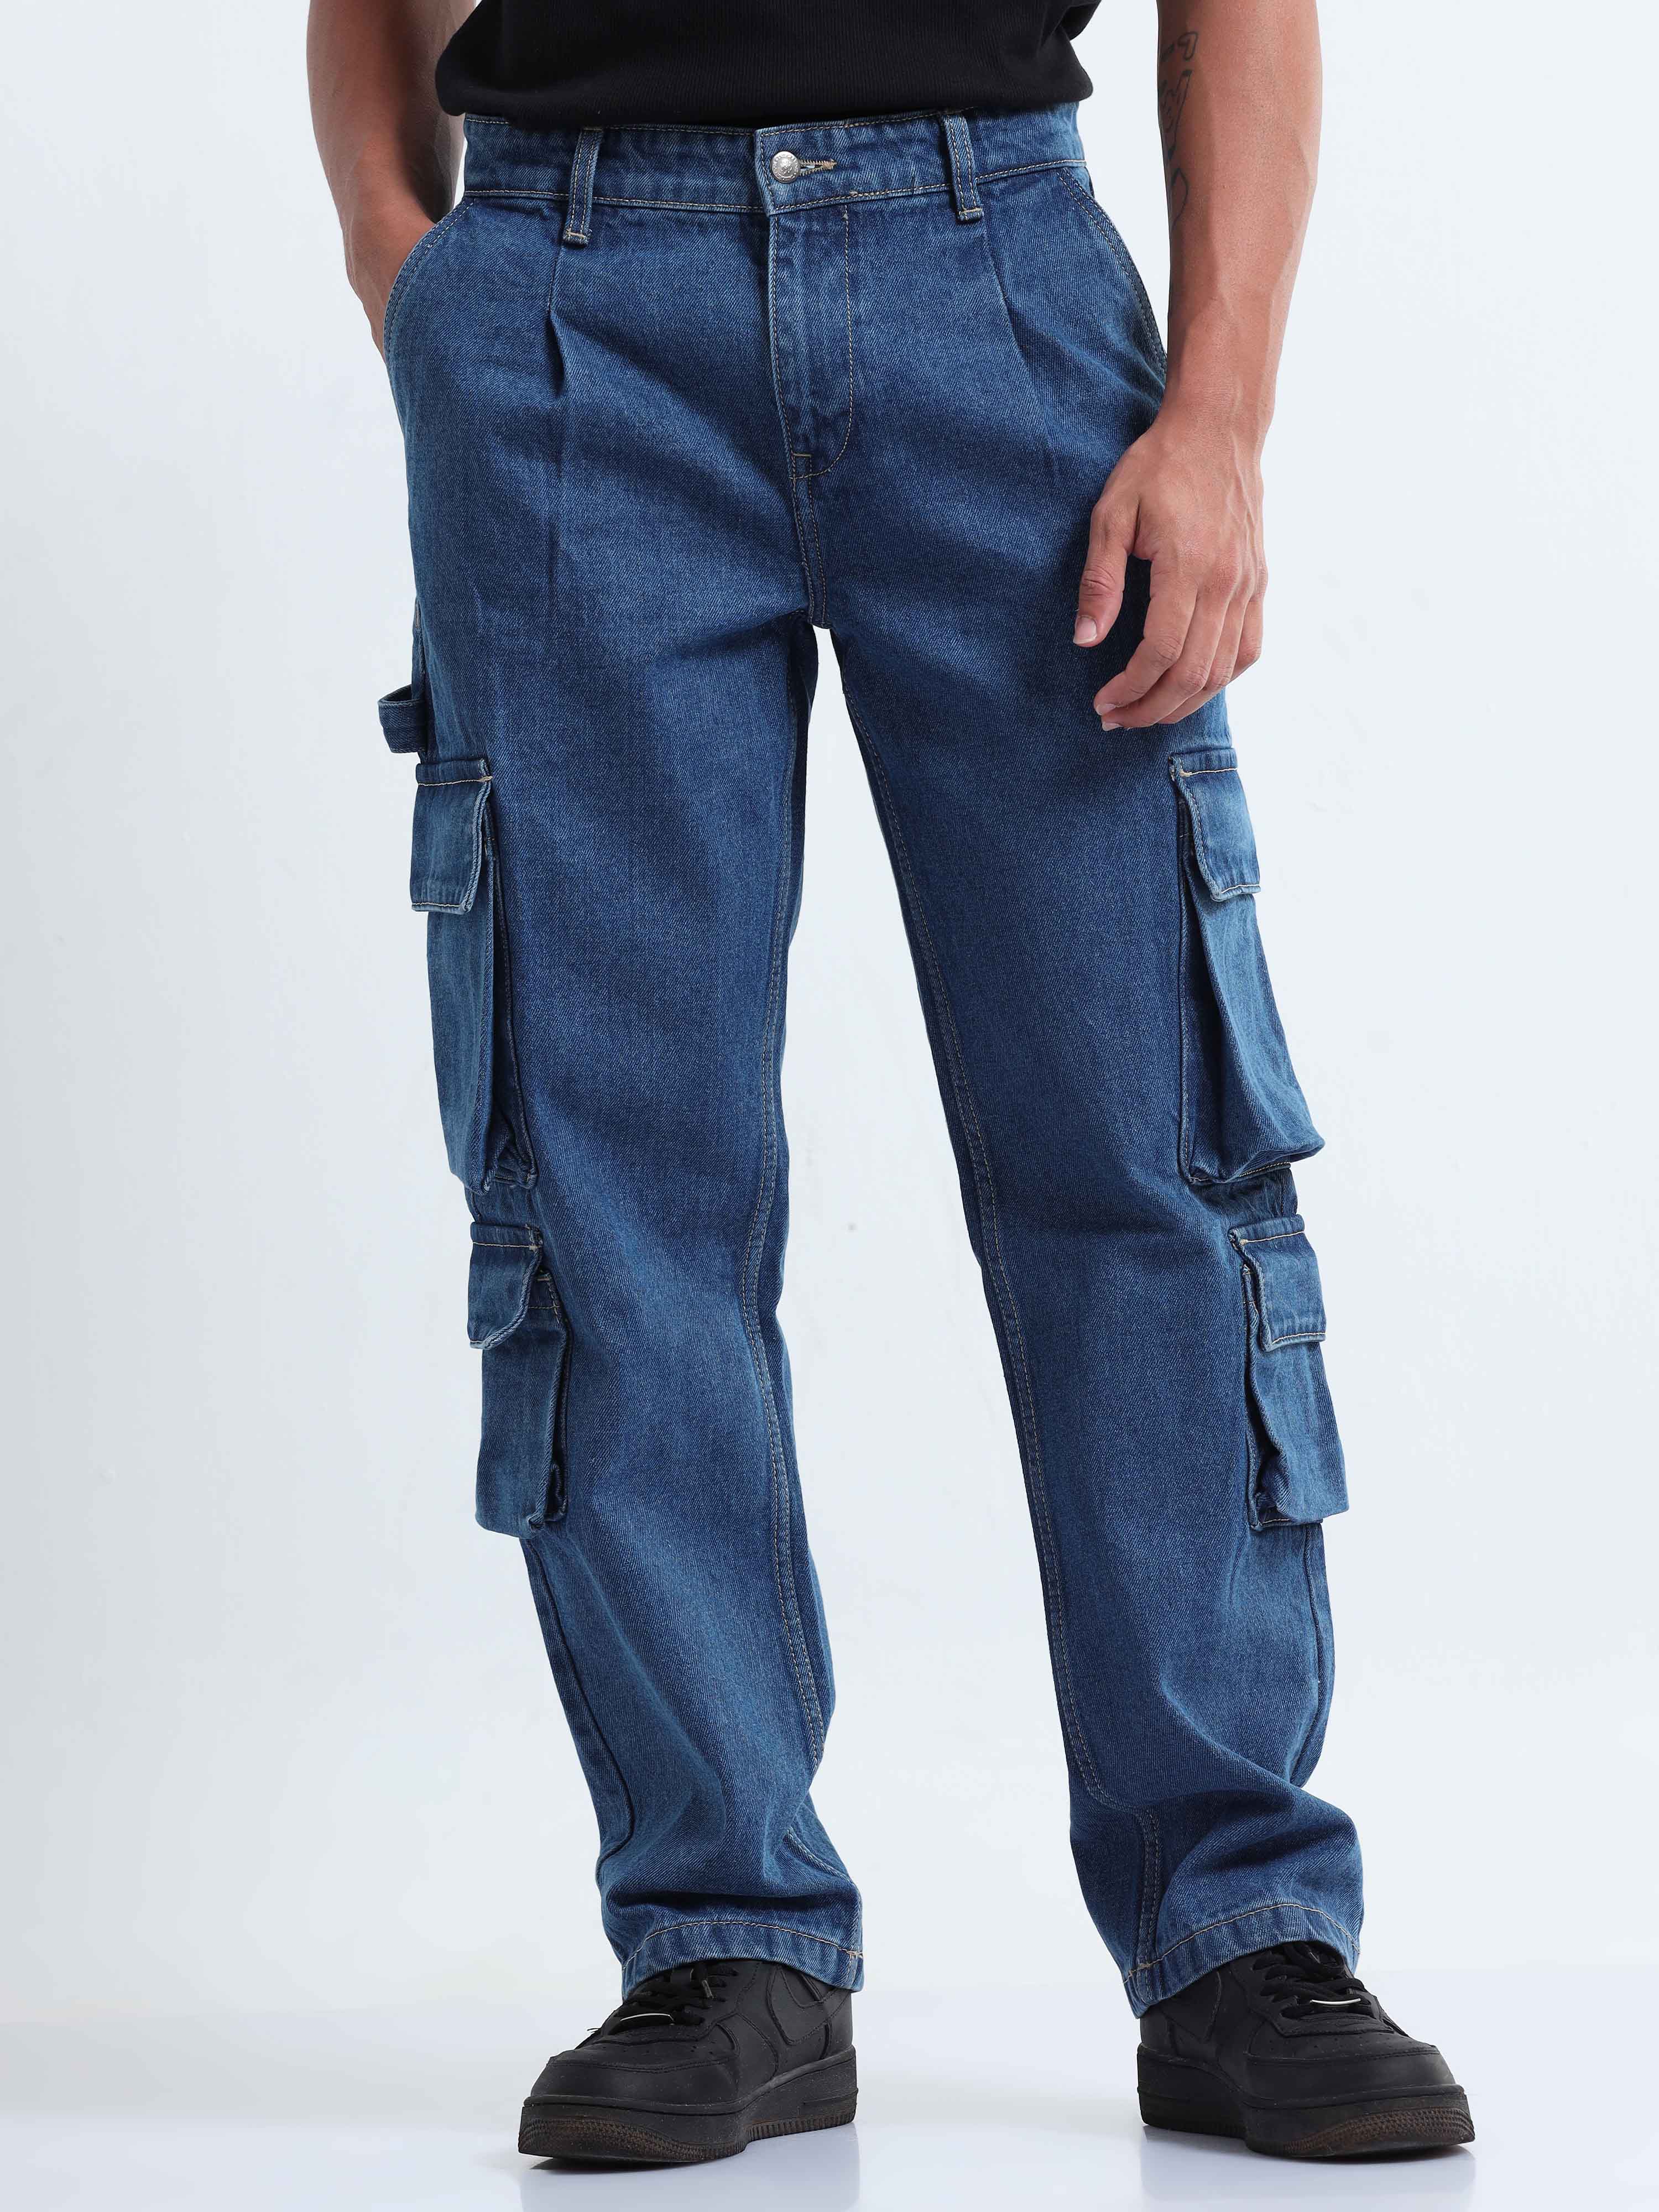 Mens Blue Denim Pockets Capri Pants Cargo Summer Jeans Trousers Loose Fit  Ripped